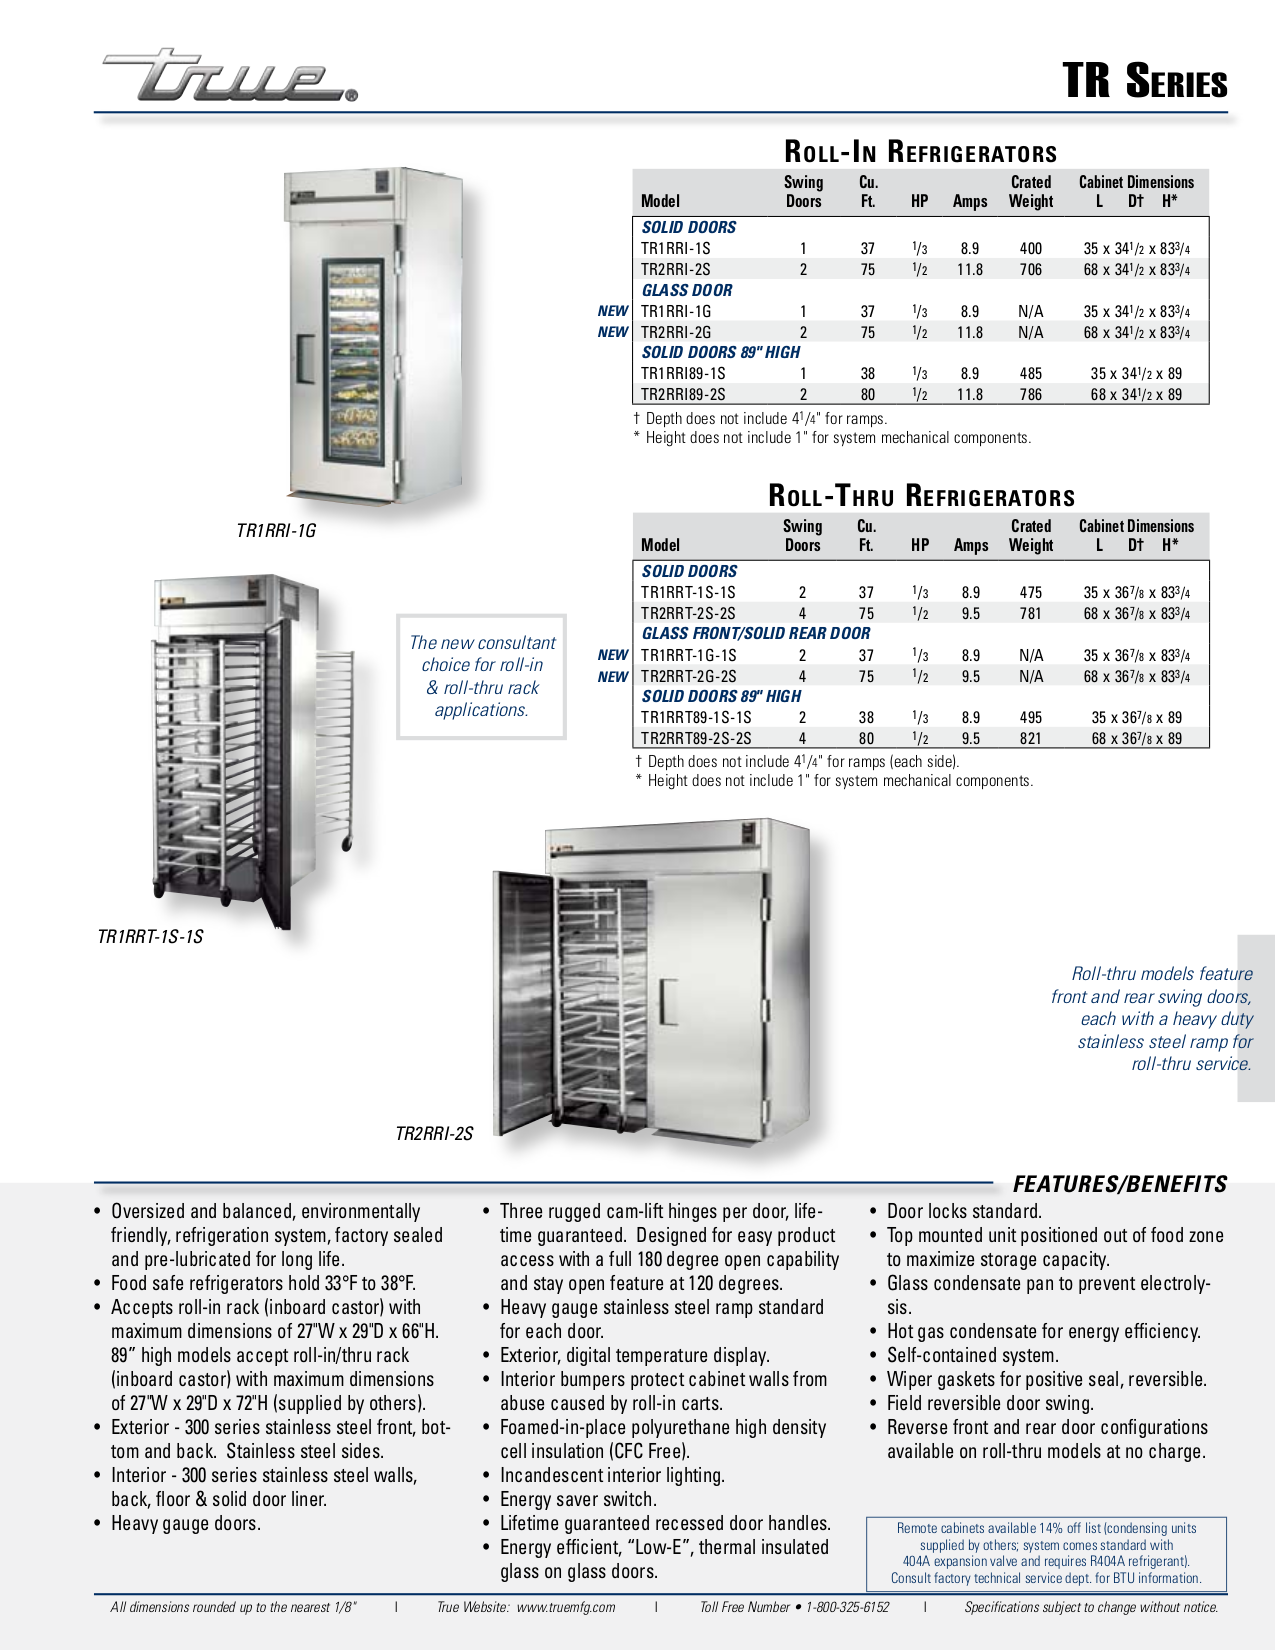 pdf for True Refrigerator TR2RRI-2G manual